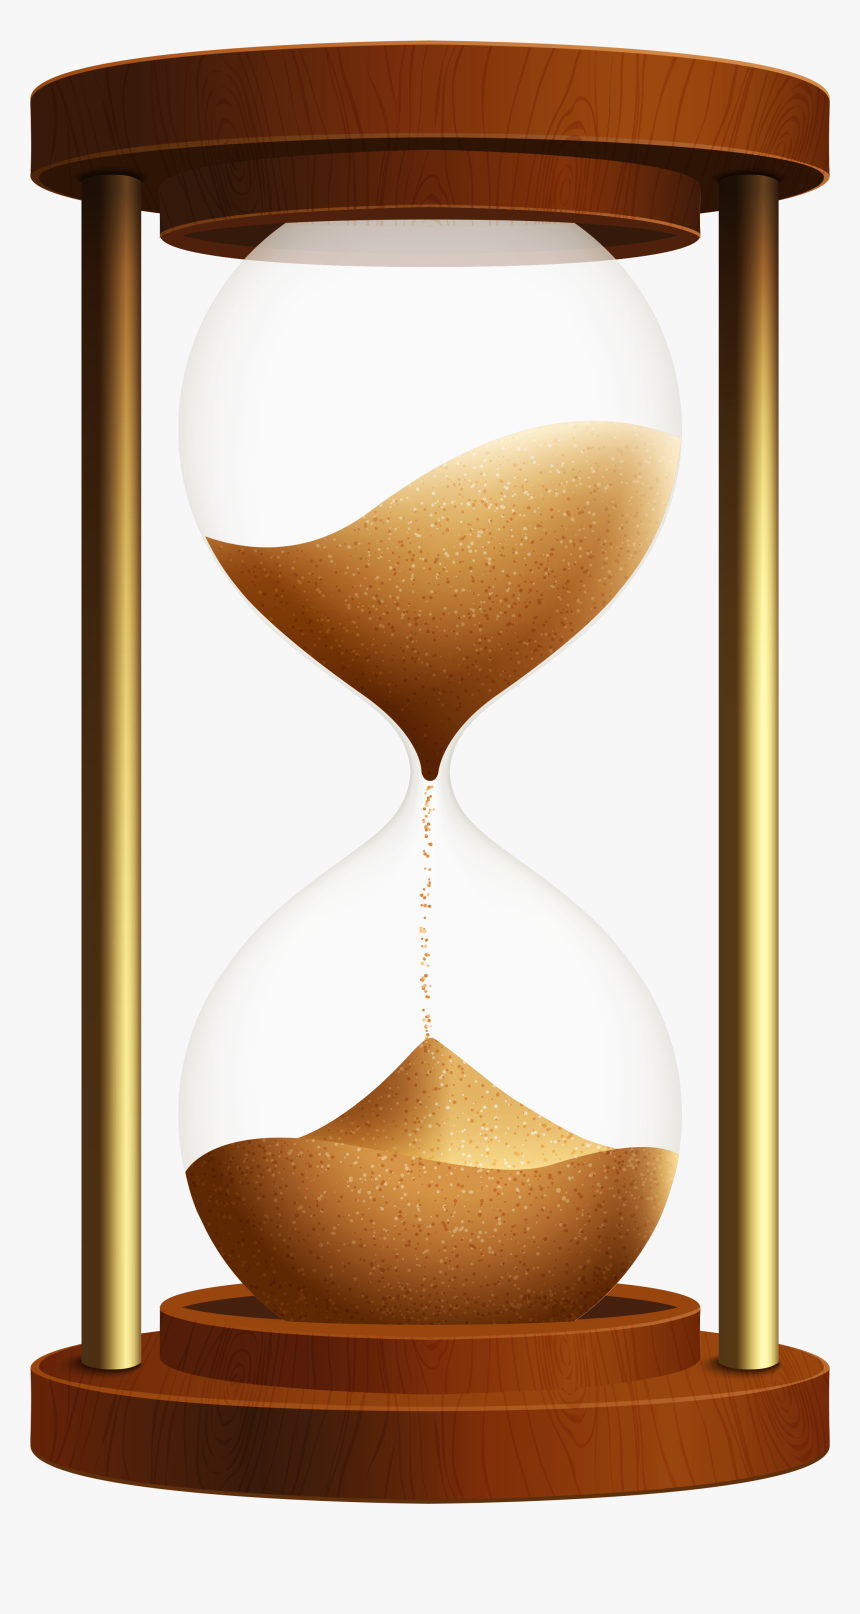 Sand Clock Png Transparent, Png Download, Free Download